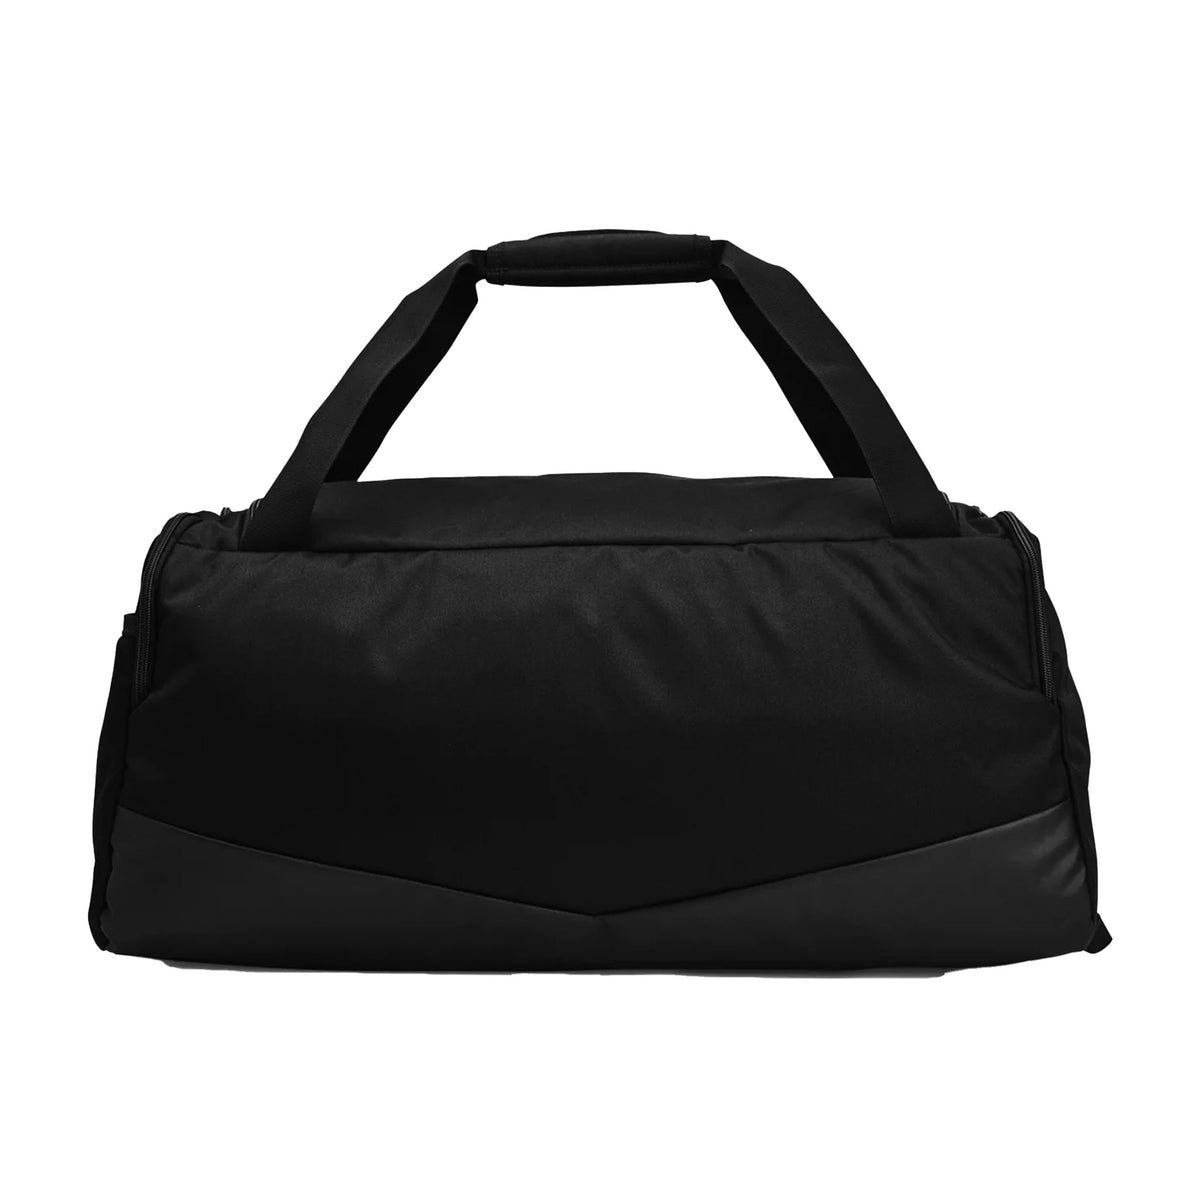 Under Armour Undeniable 5.0 Medium Duffel Bag: Black